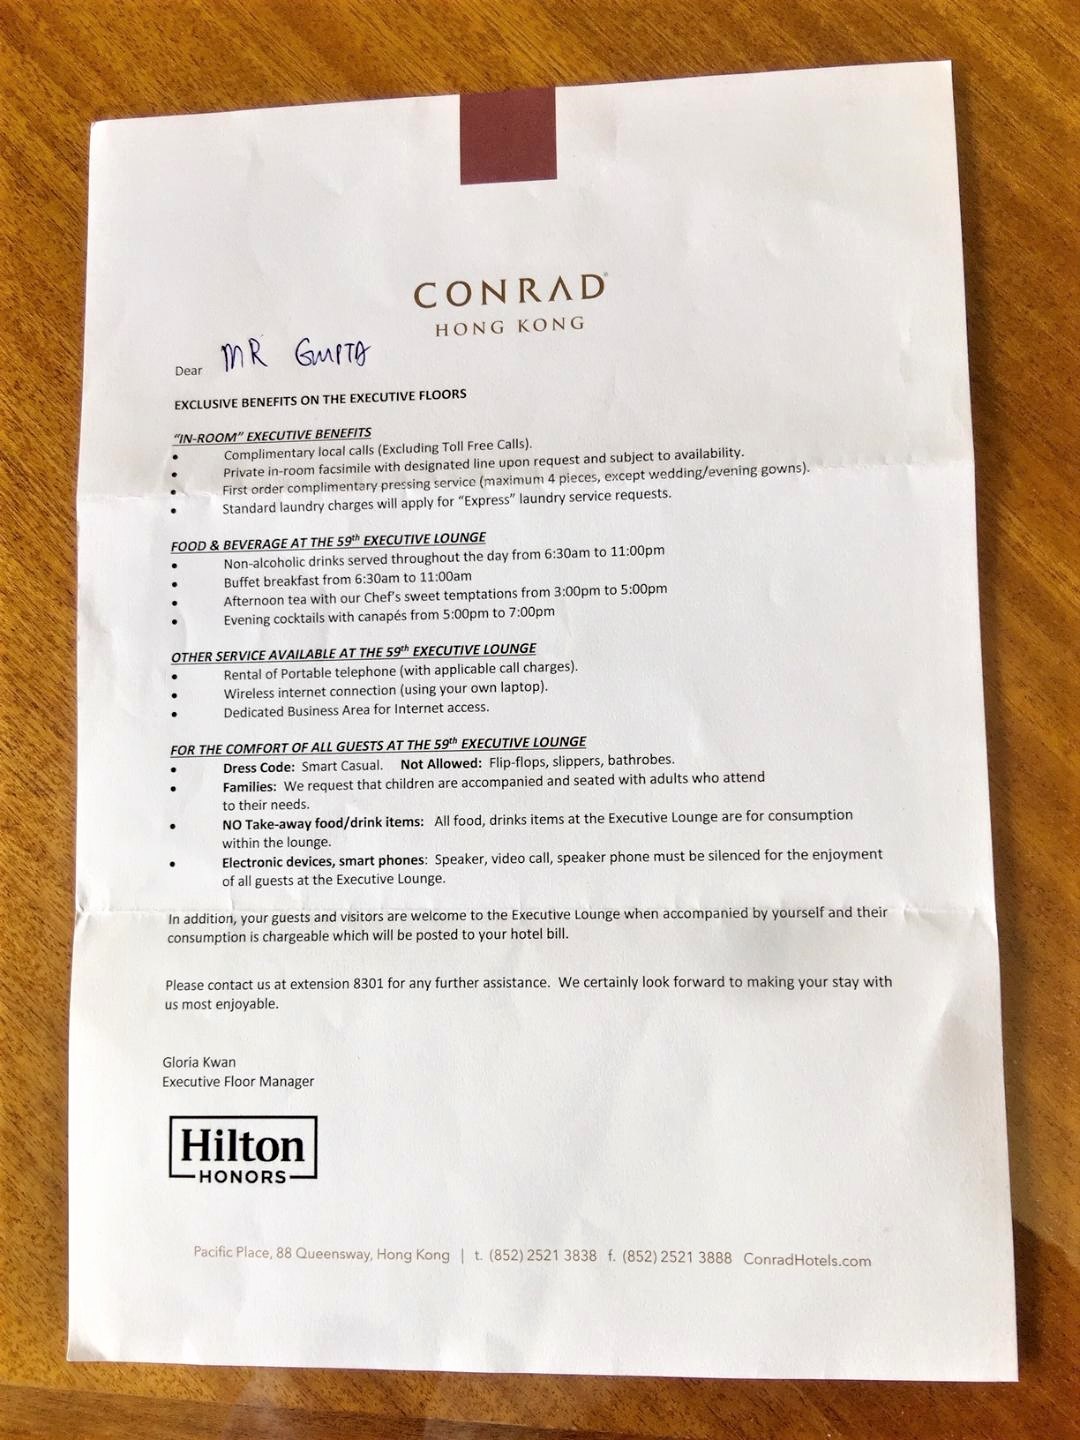 Welcome Letter - Conrad Hong Kong